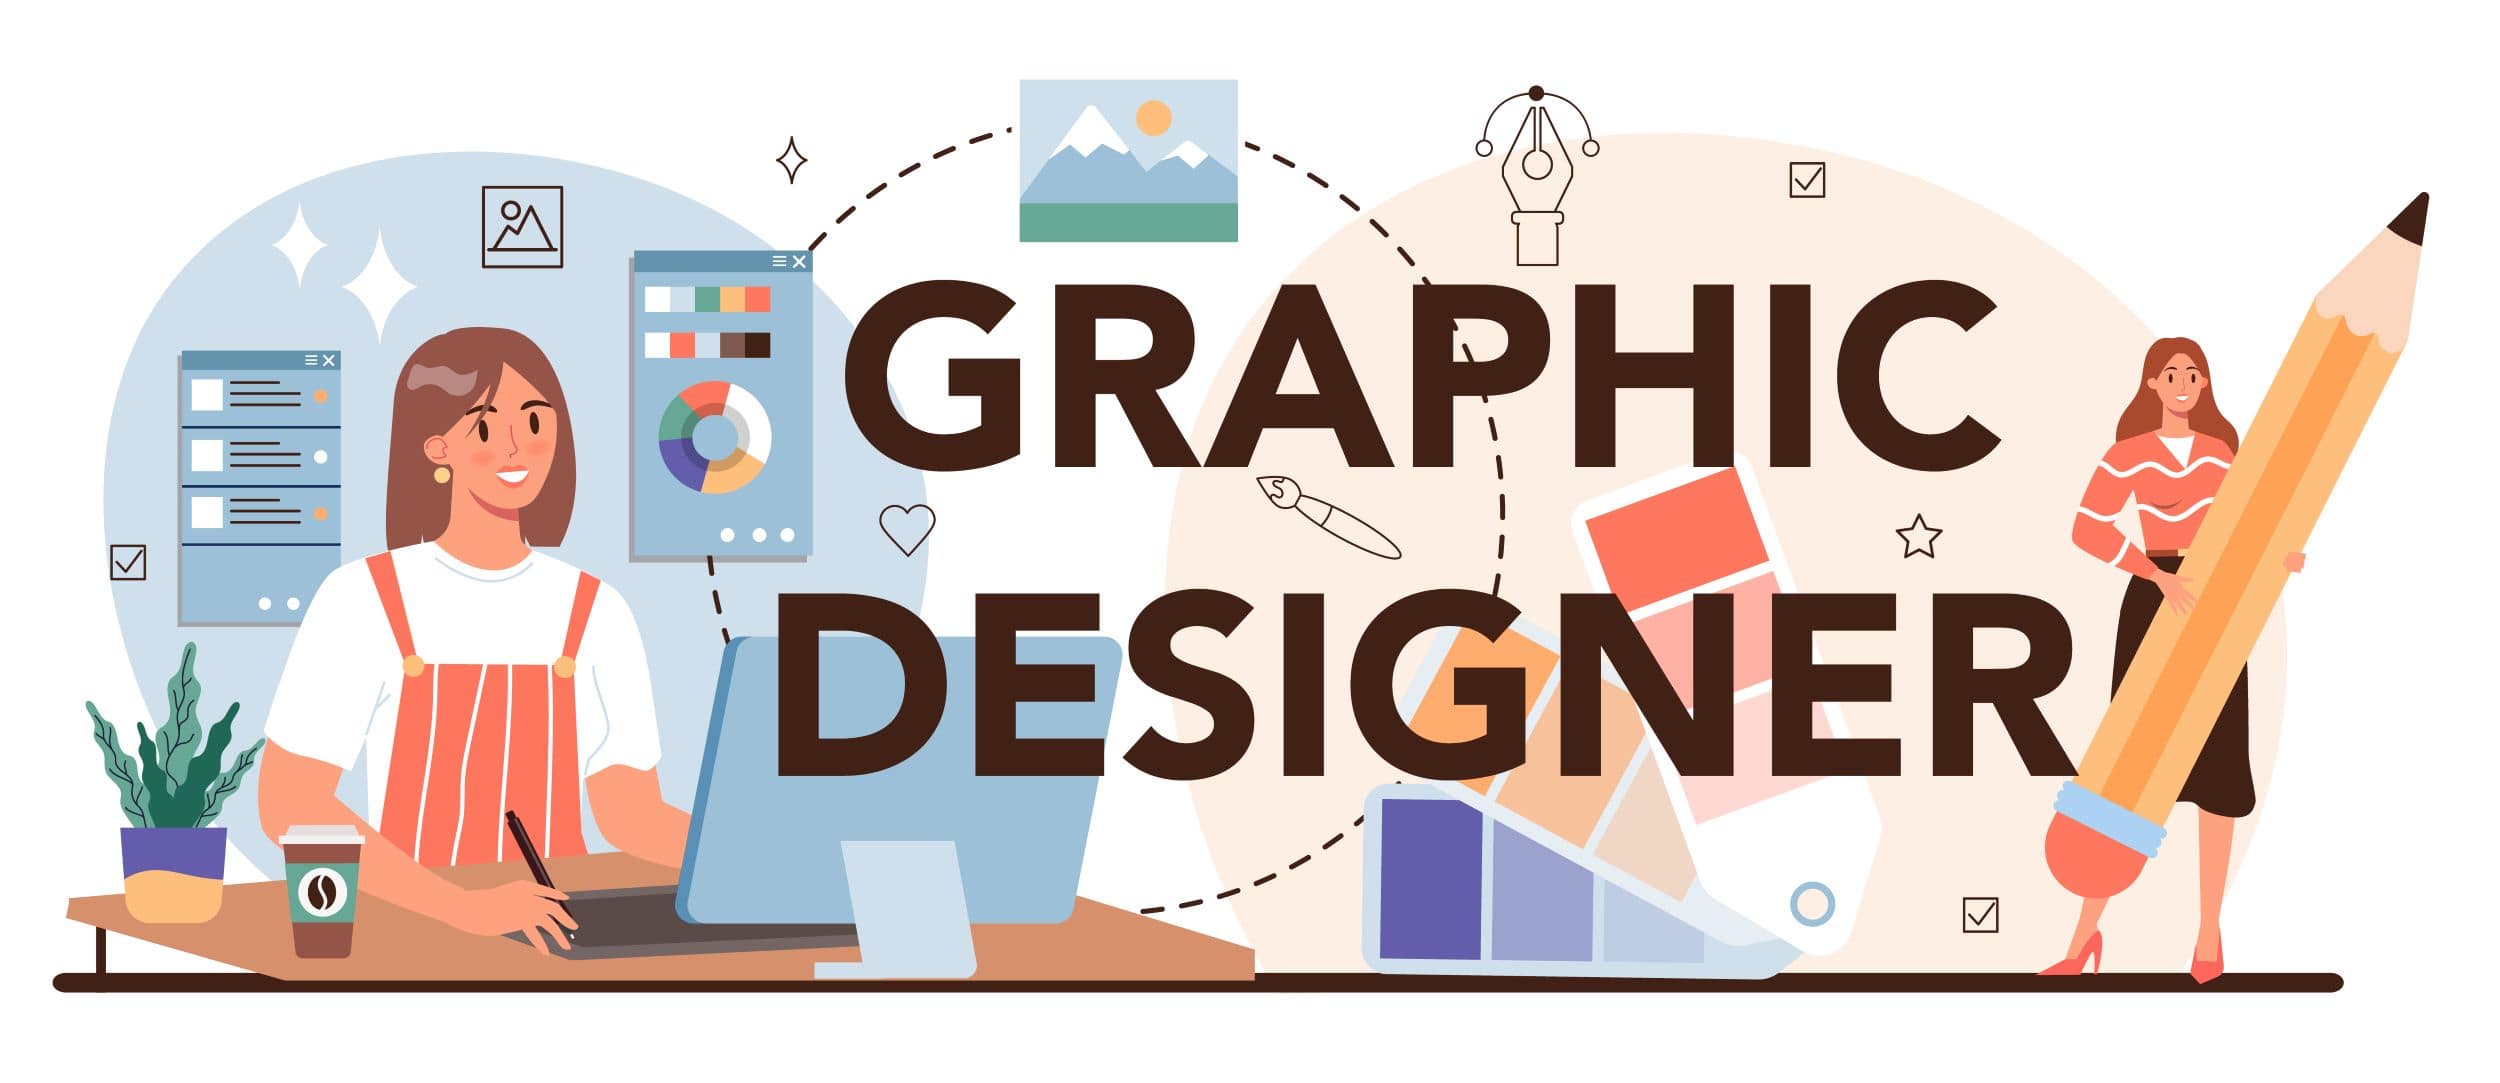 طراحی گرافیک چیست؟ اصول های طراحی گرافیک